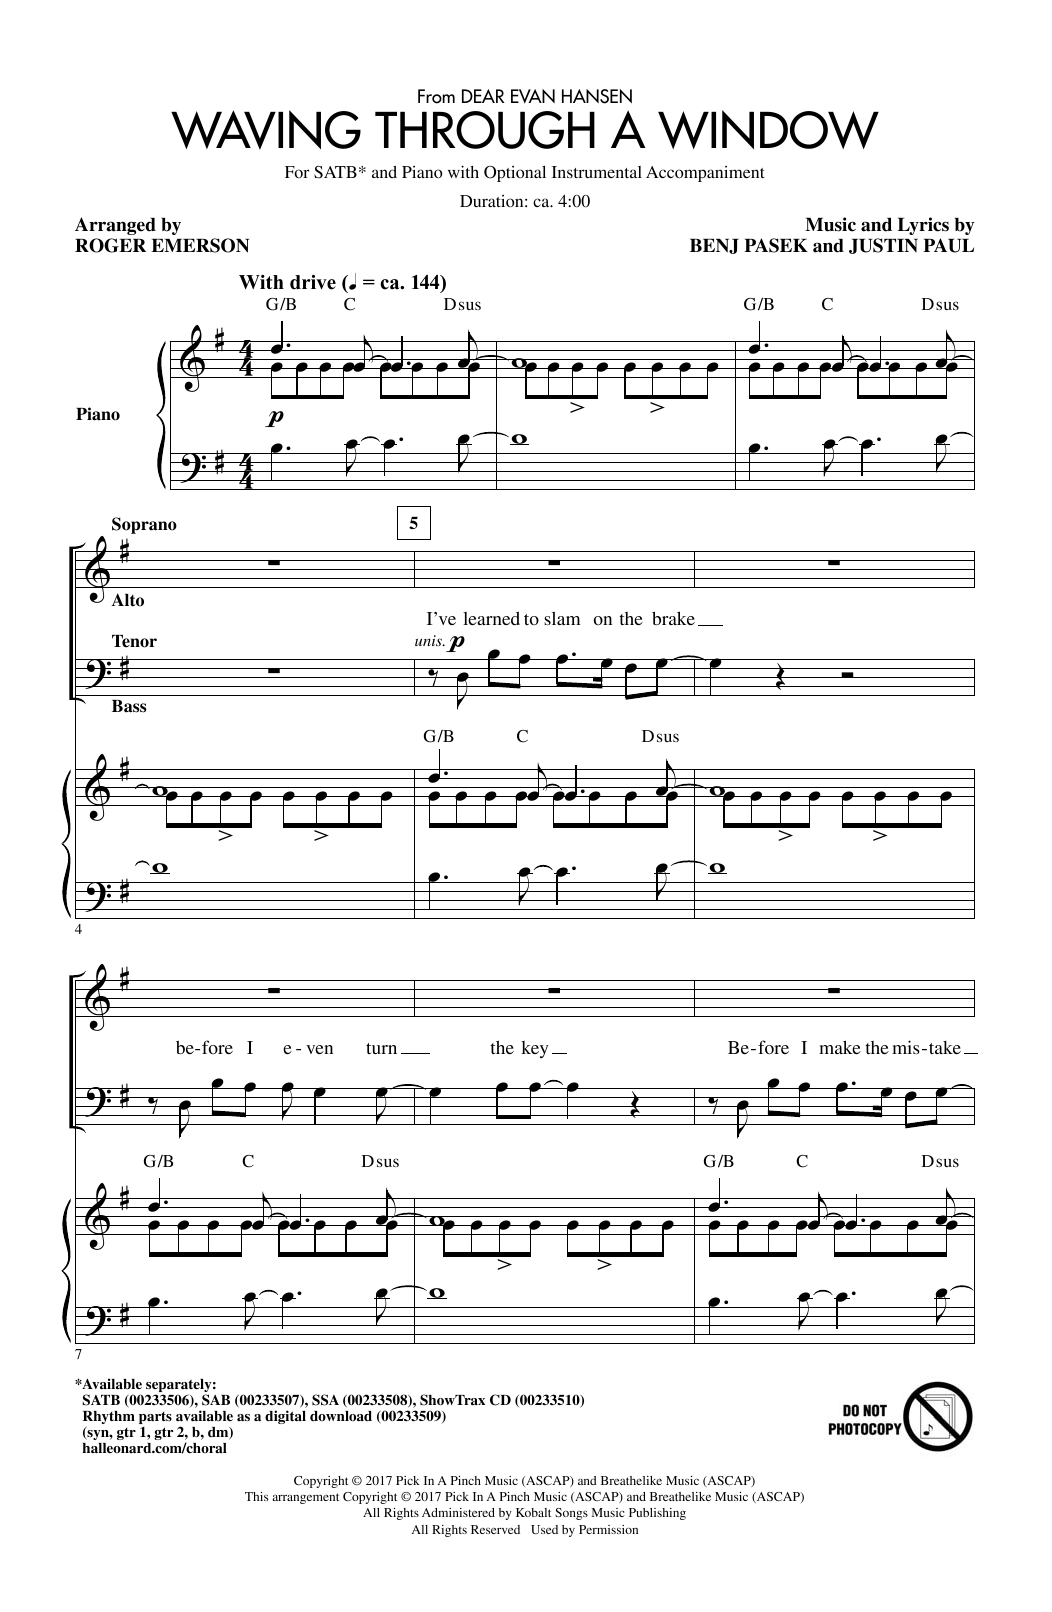 Roger Emerson Waving Through A Window Sheet Music Notes & Chords for SATB Choir - Download or Print PDF